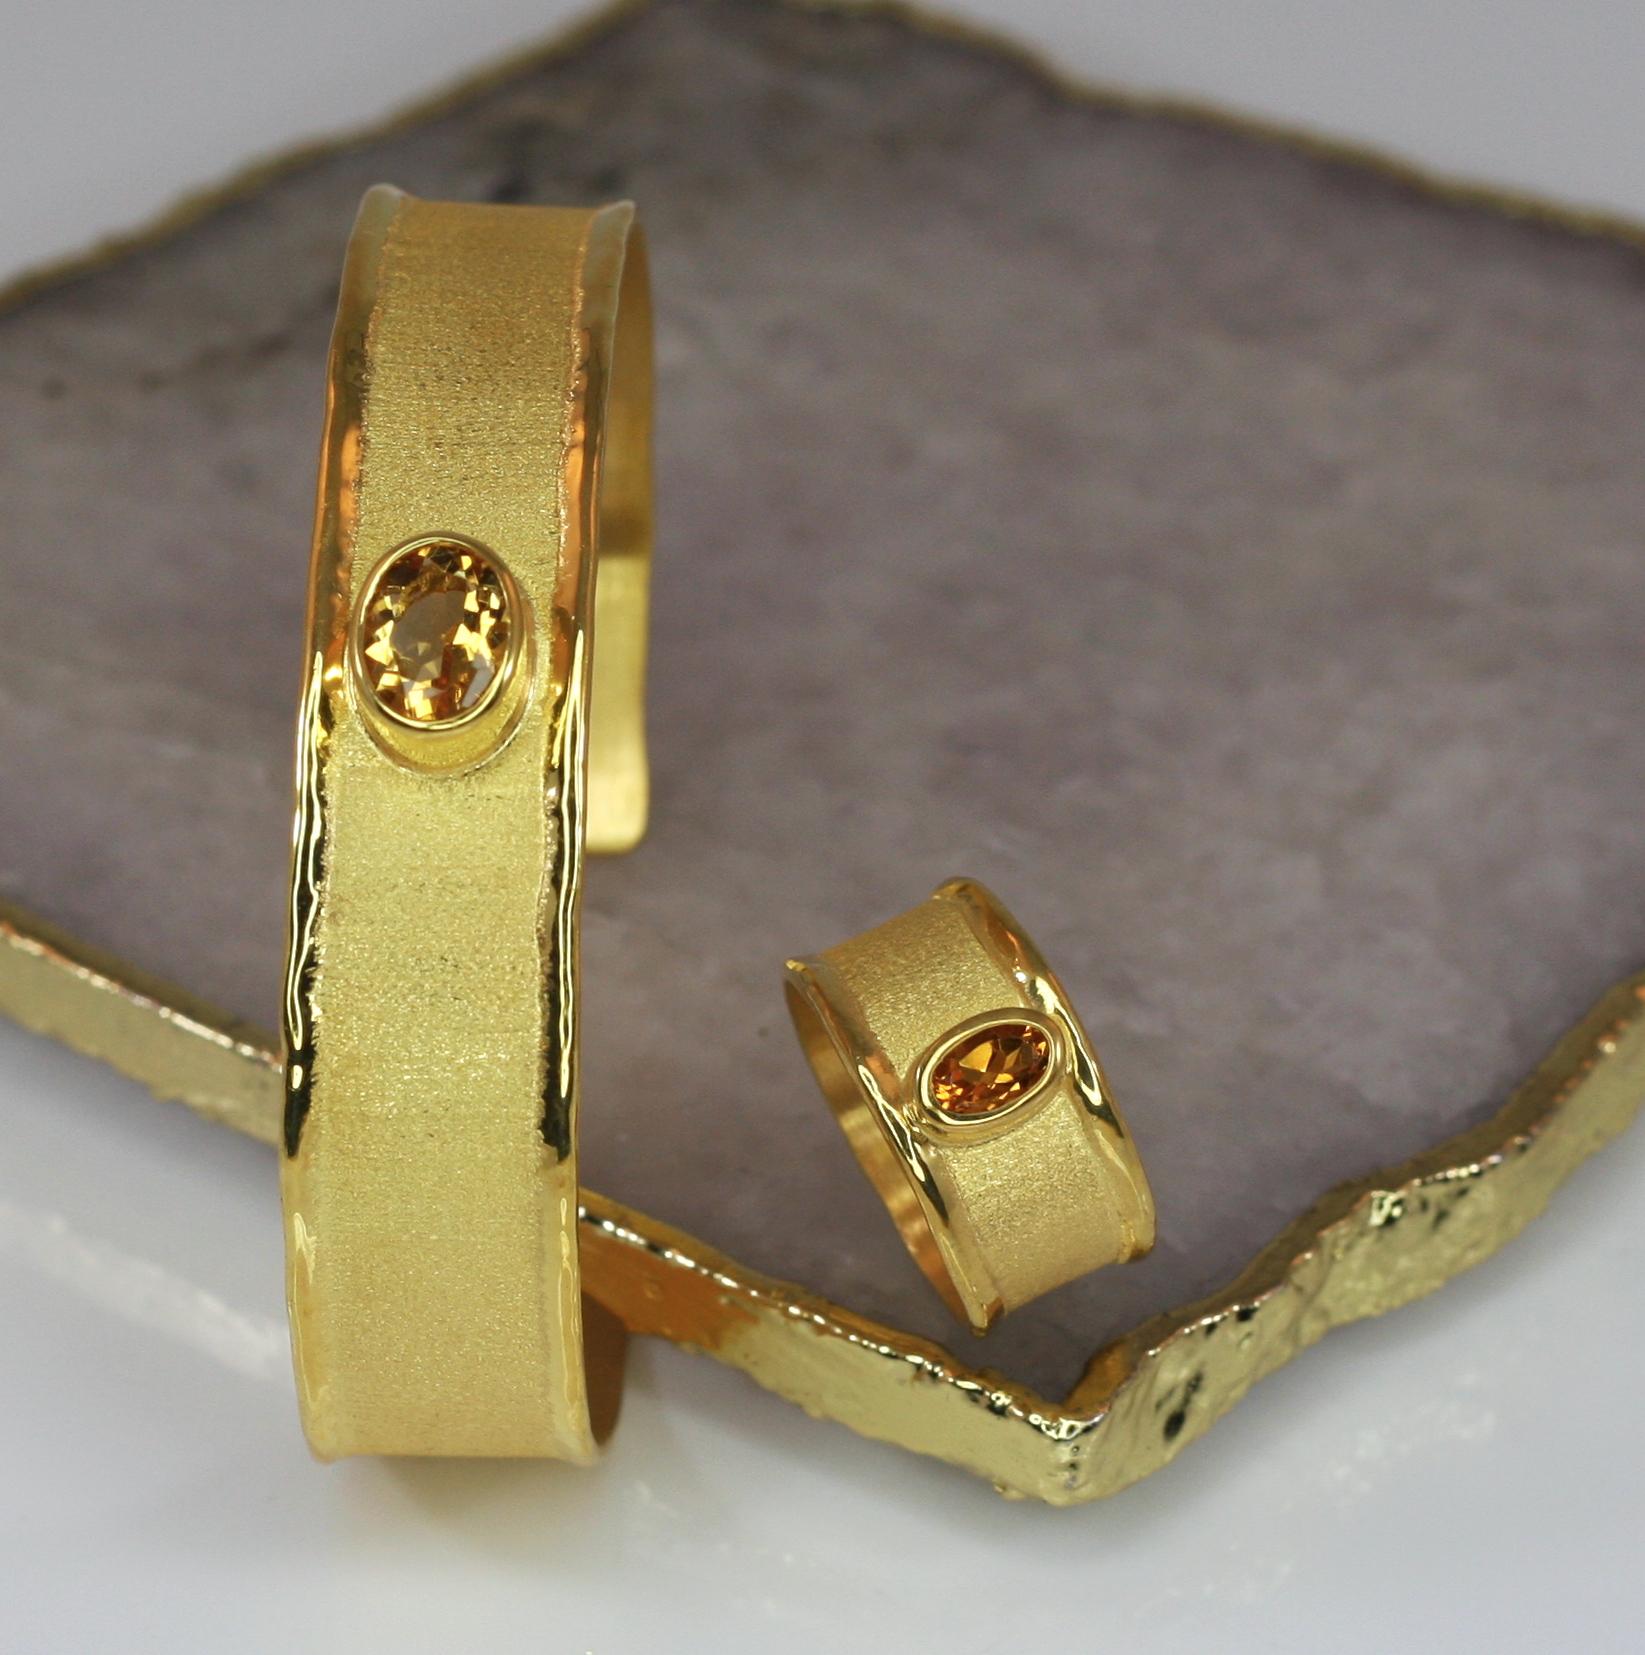 Women's or Men's Yianni Creations 18 Karat Gold Bangle Bracelet with Citrine For Sale